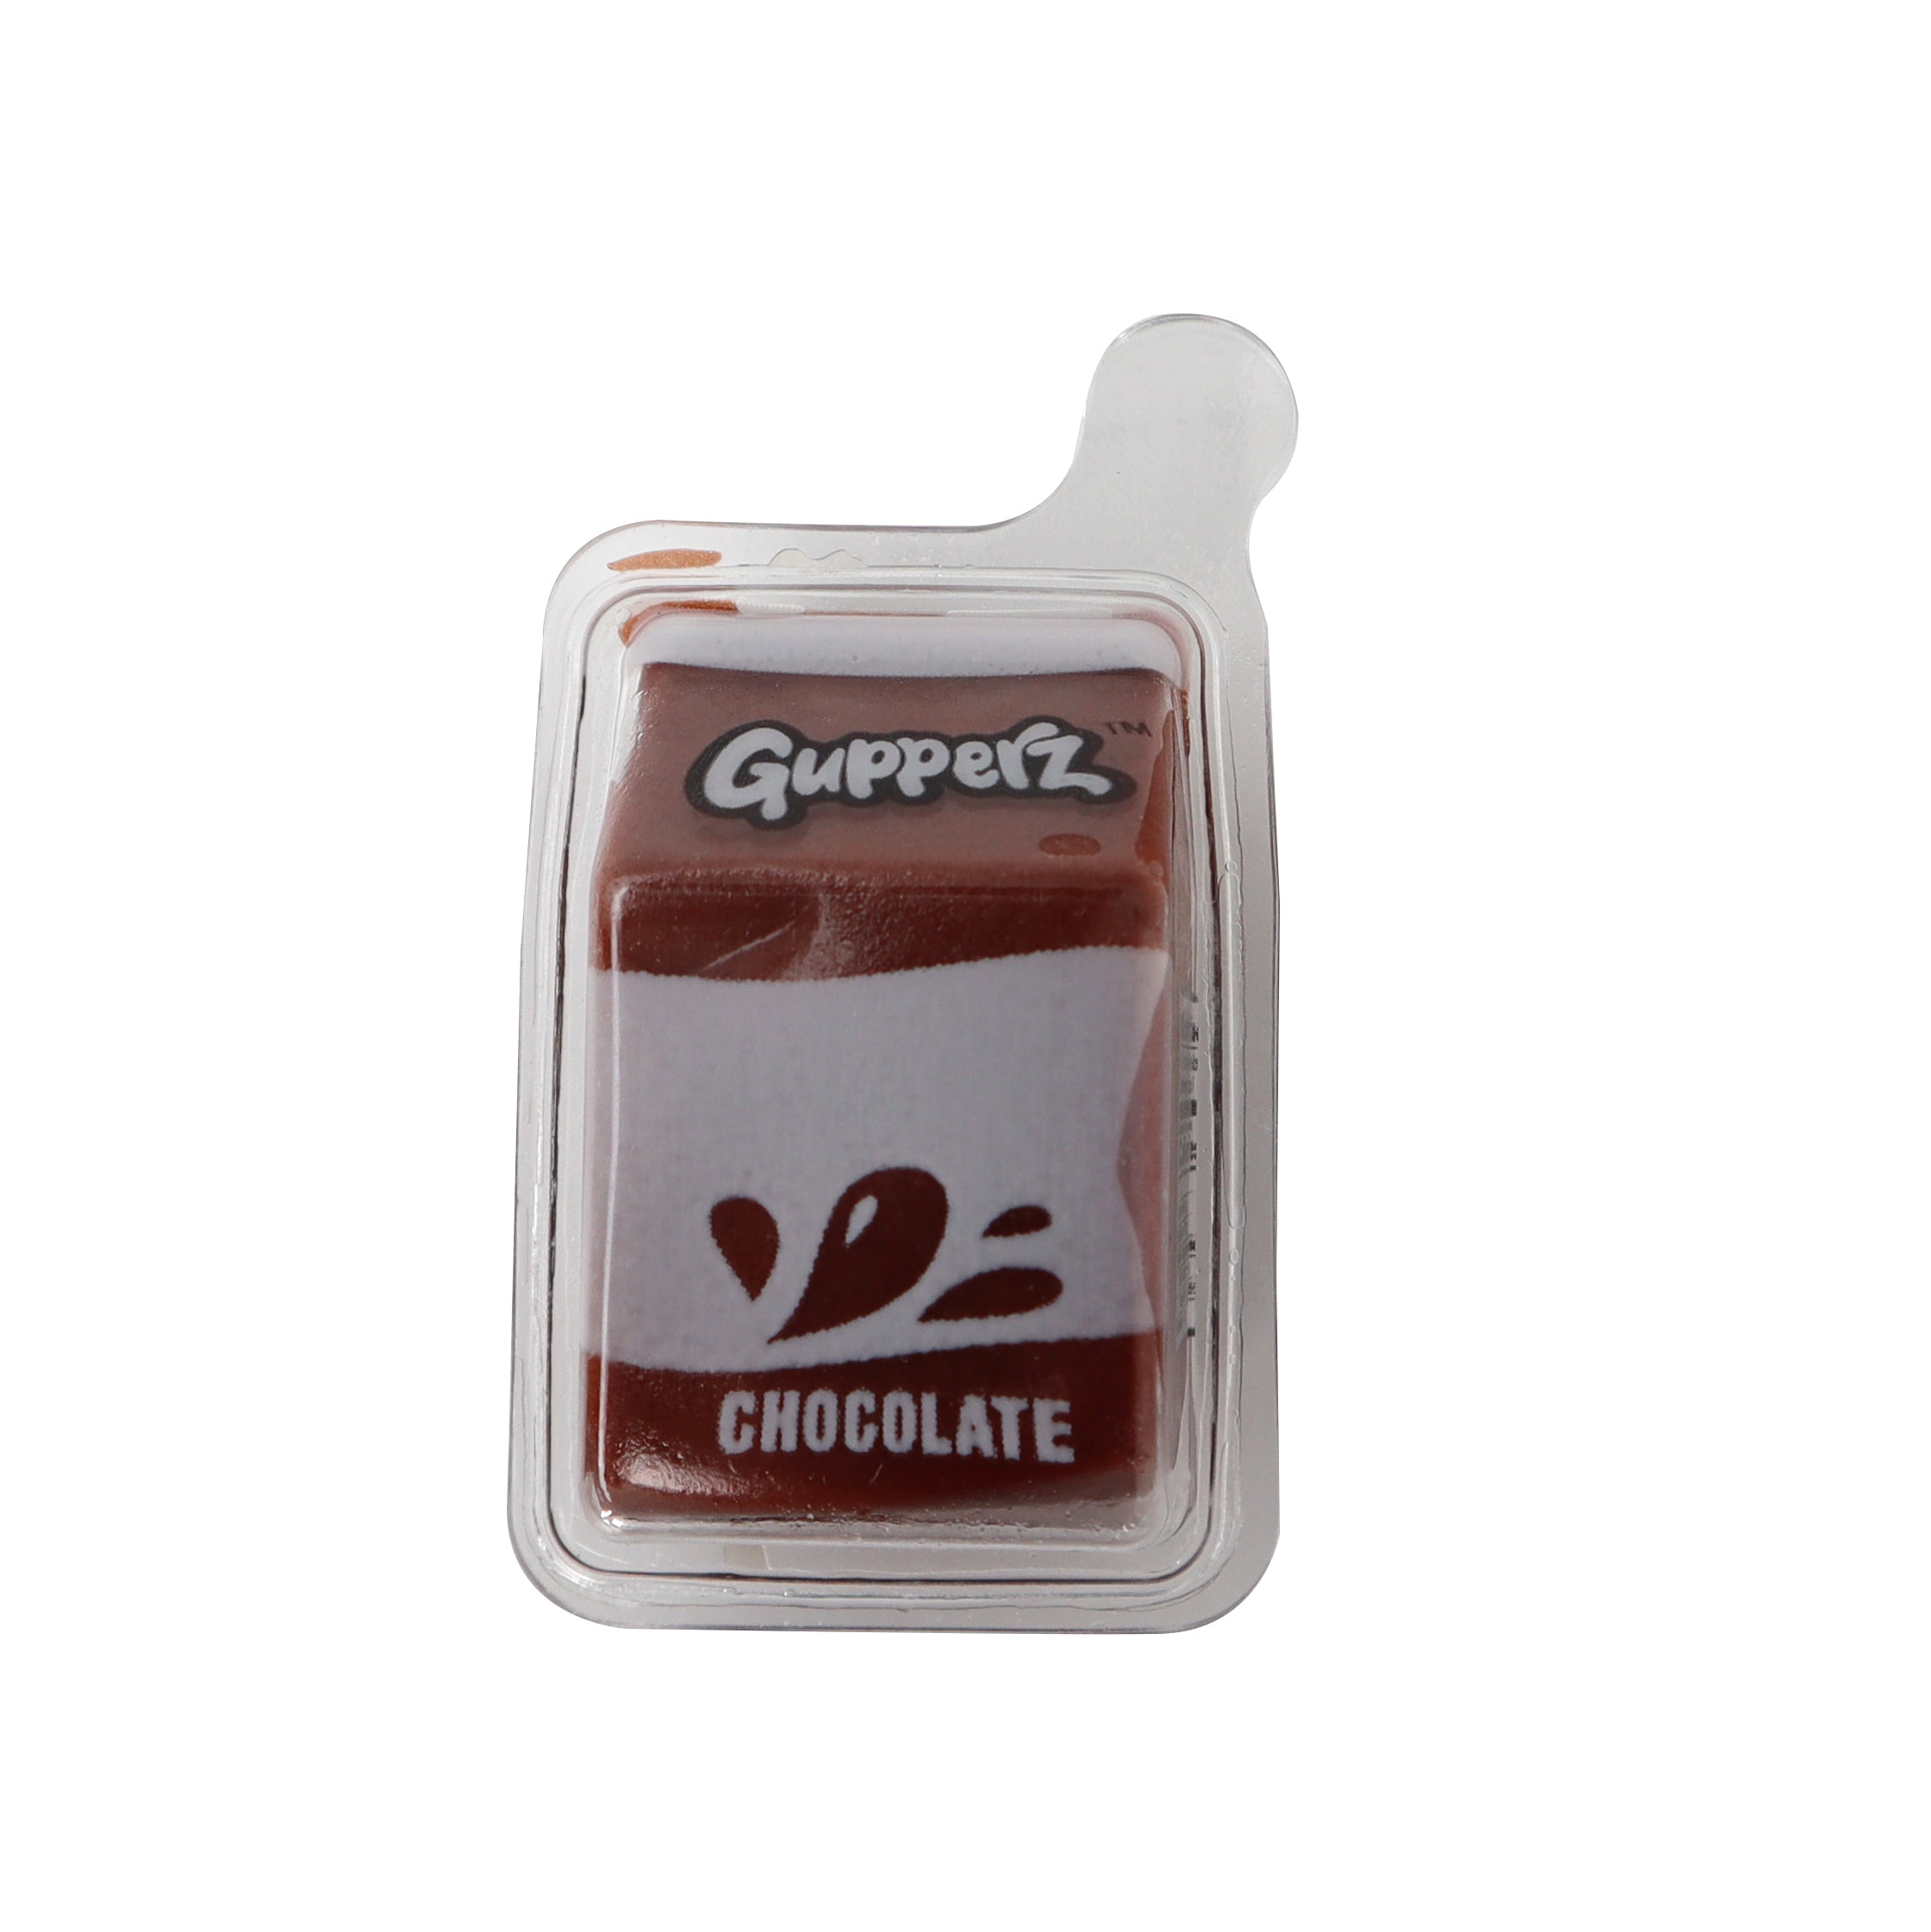 Gupperz Chocolate Milkano 2.54oz (Box Of 6 Bags)